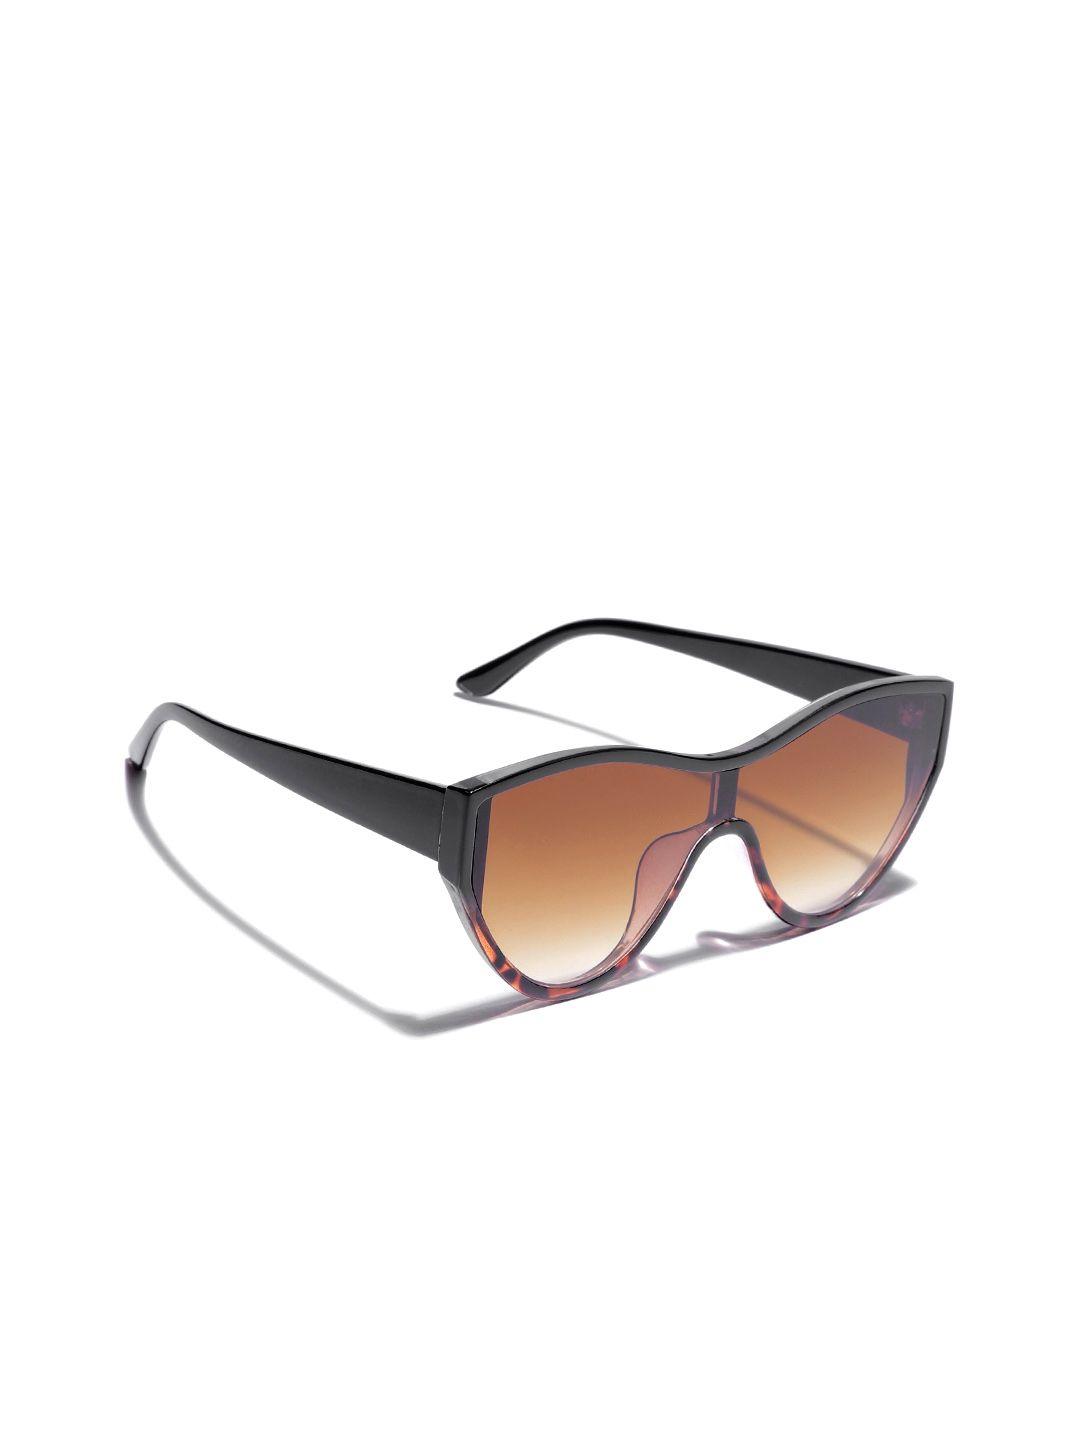 carlton london women brown lens & black shield sunglasses with uv protected lens